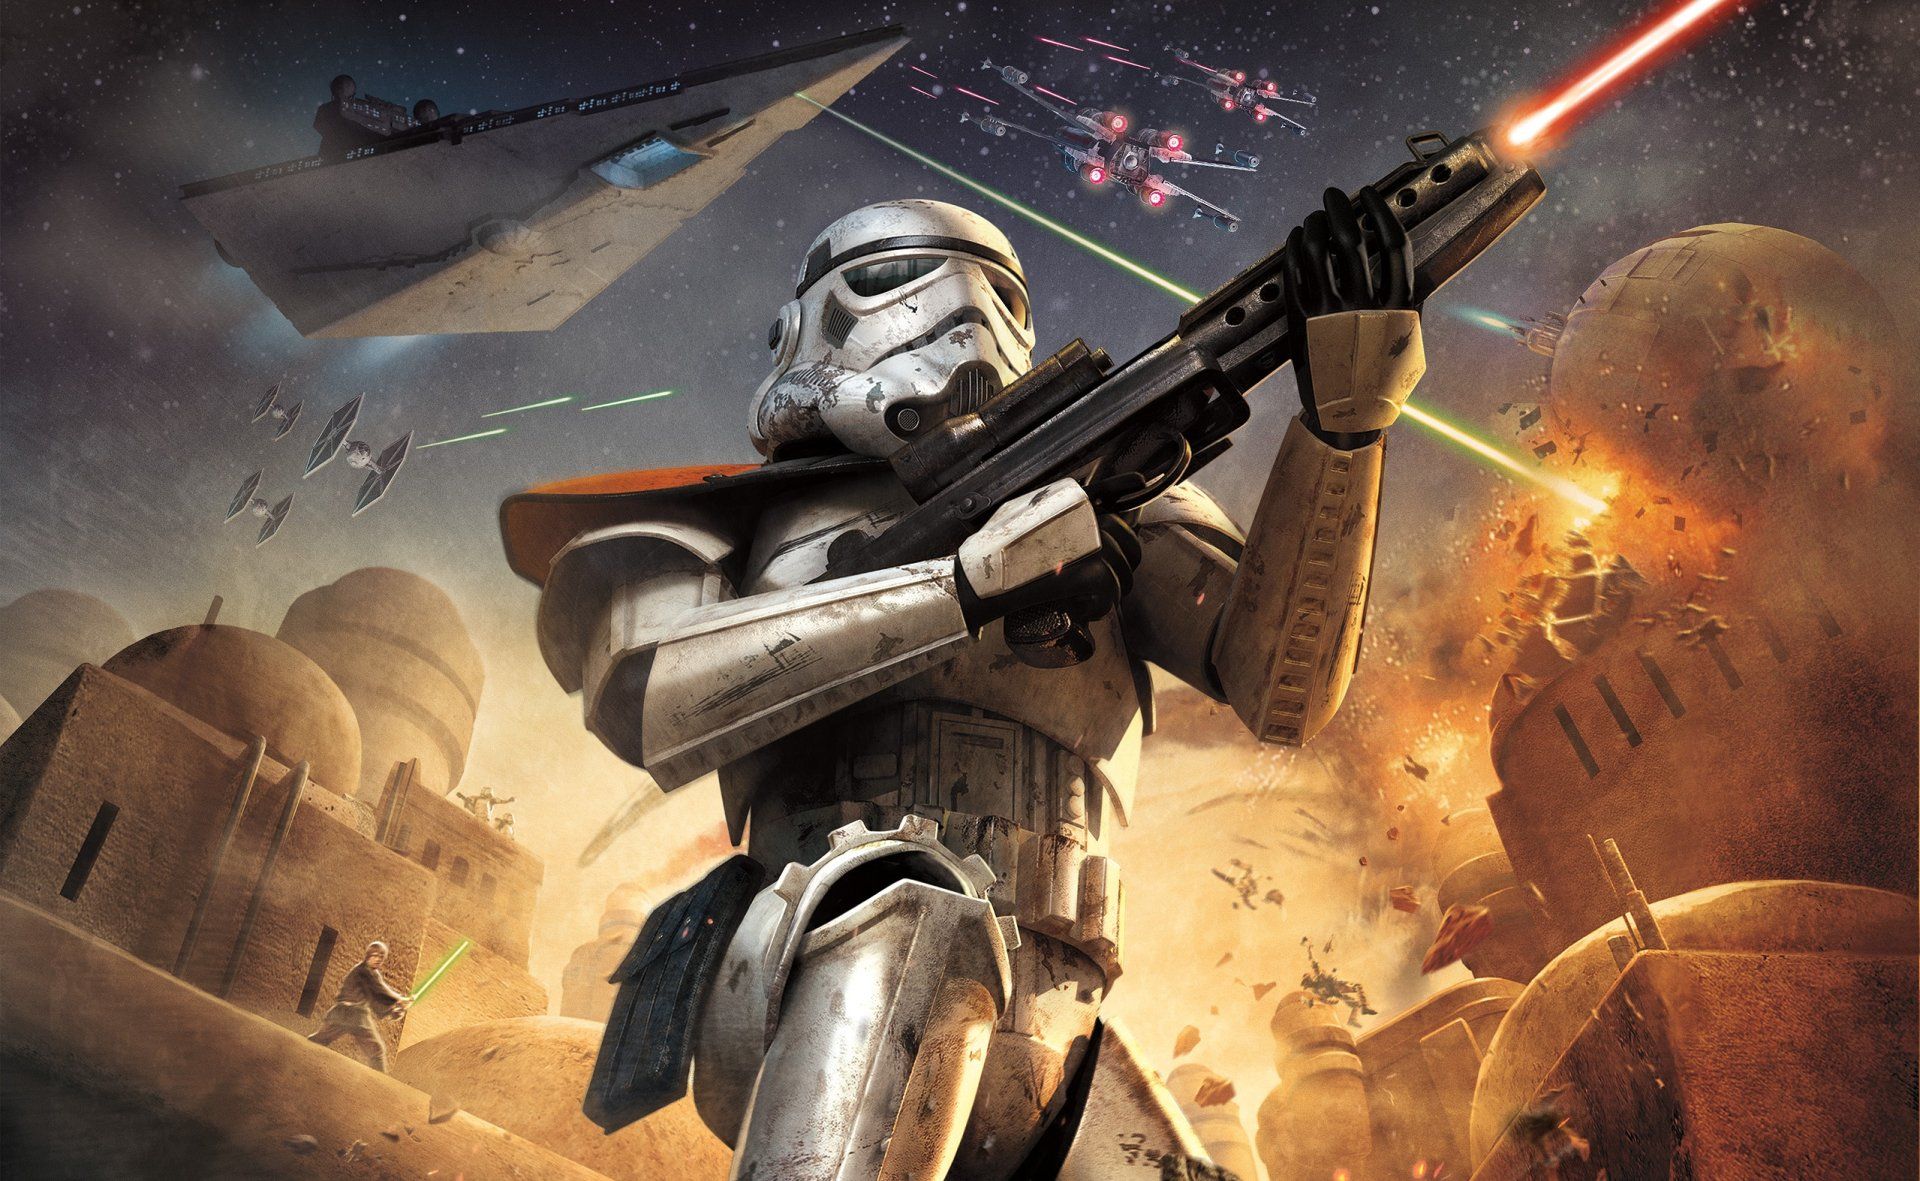 Star Wars Battlefront: Elite Squadron HD Wallpaper and Background Image